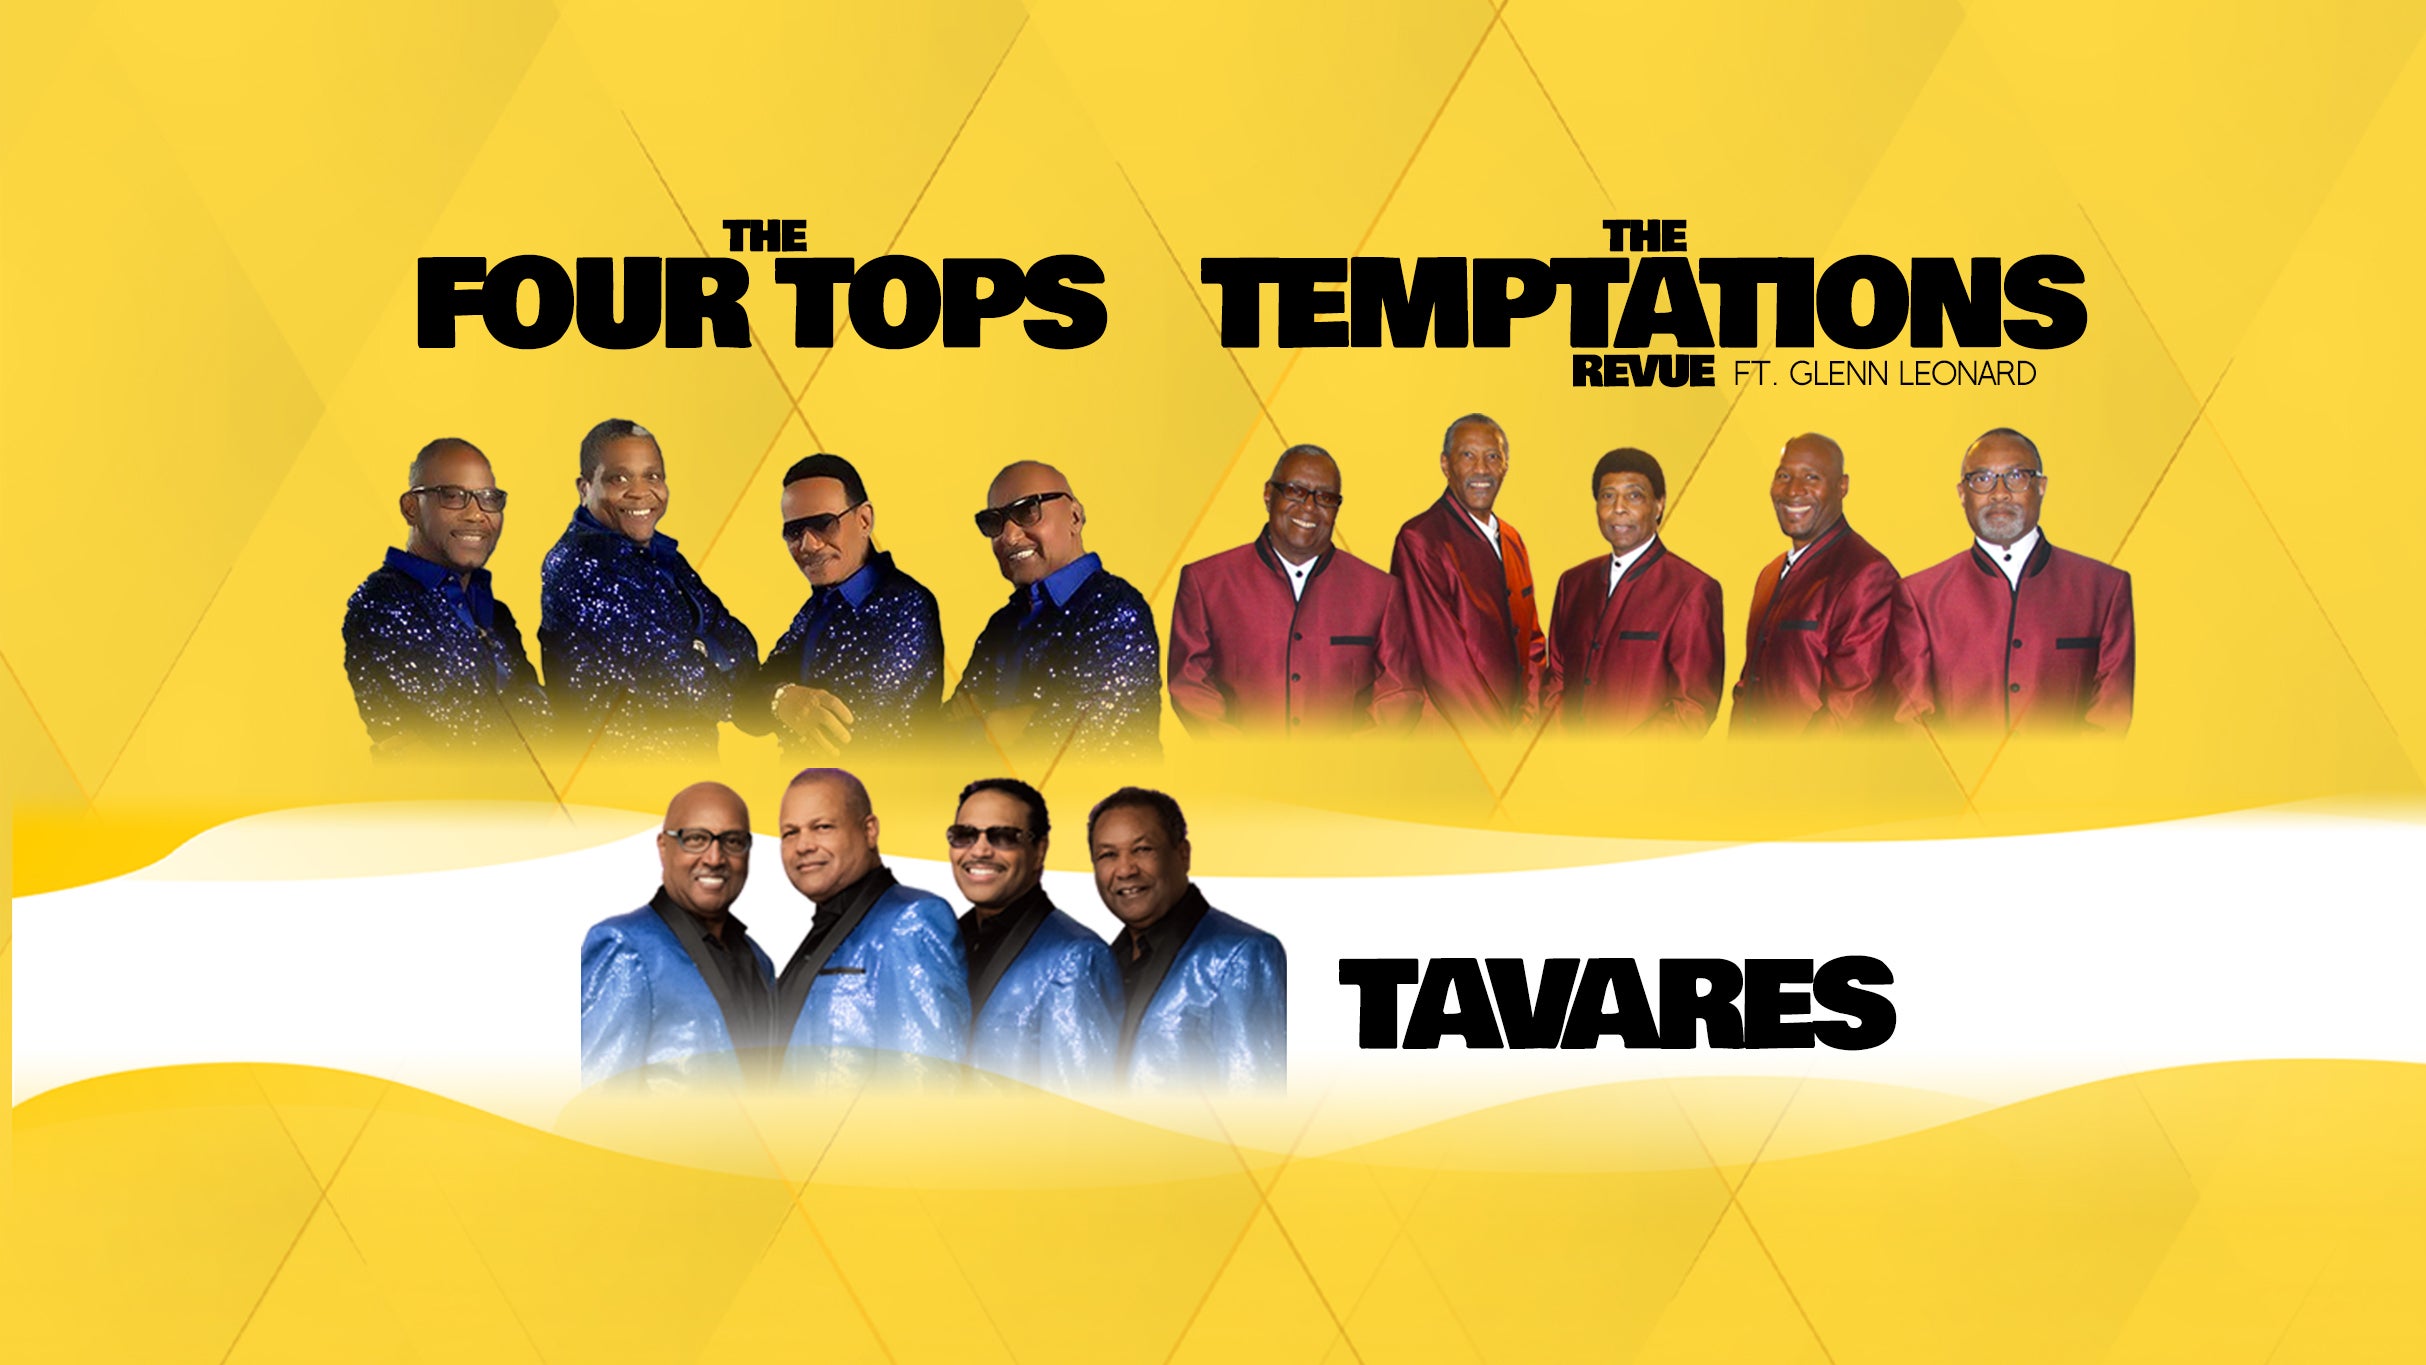 The Four Tops/ The Temptations Revue ft. Glenn Leonard / Tavares in Cardiff promo photo for Venue presale offer code